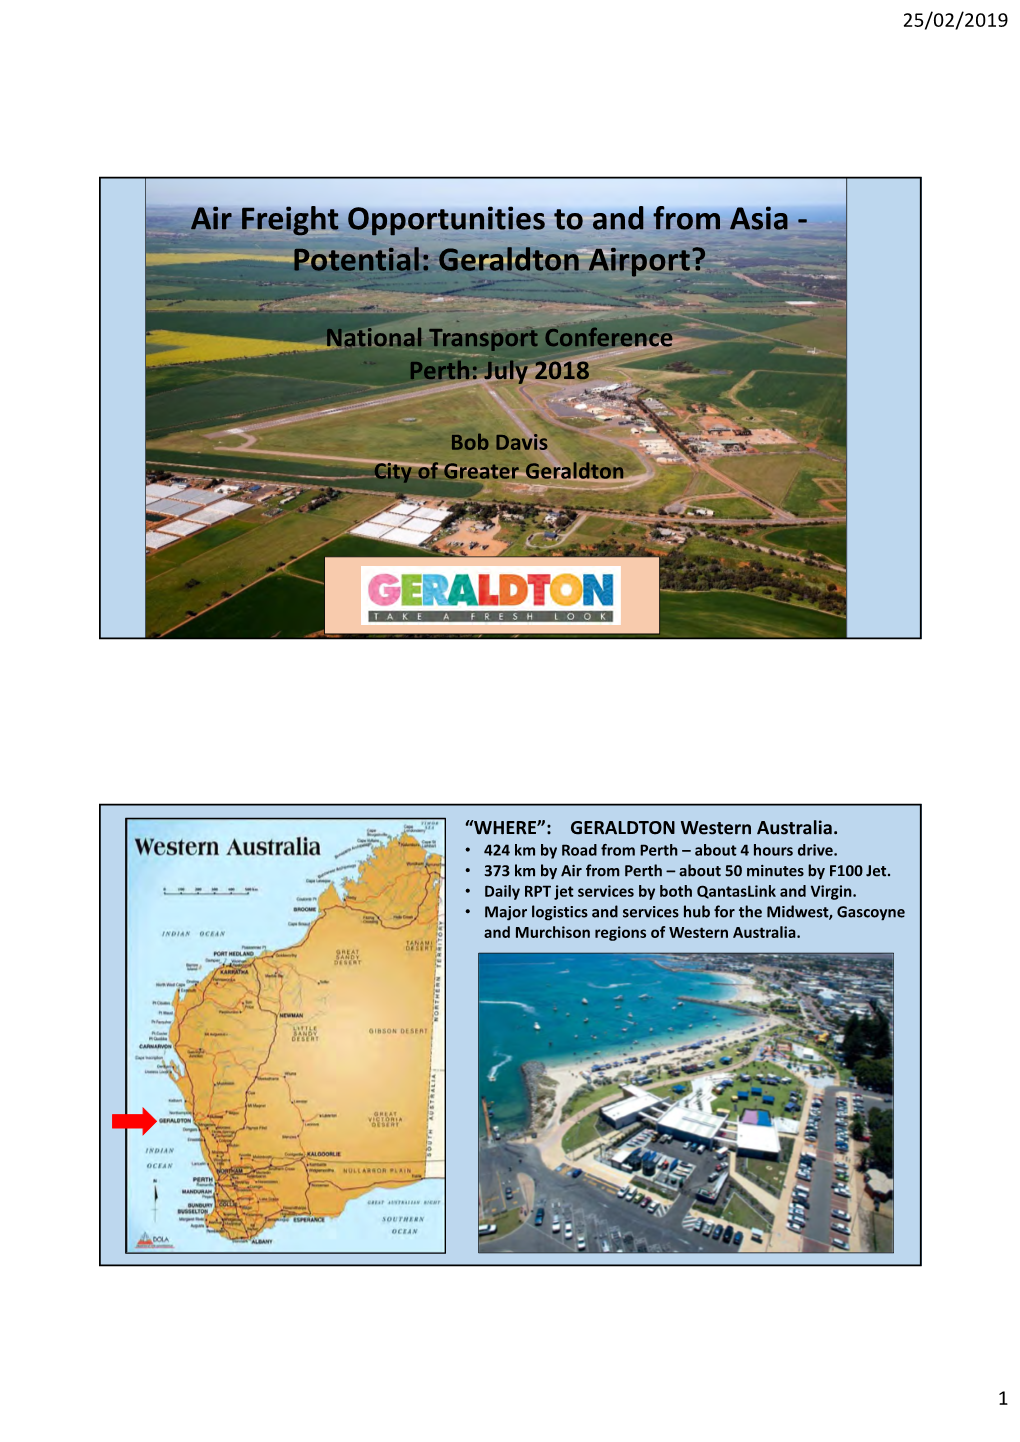 Potential: Geraldton Airport?